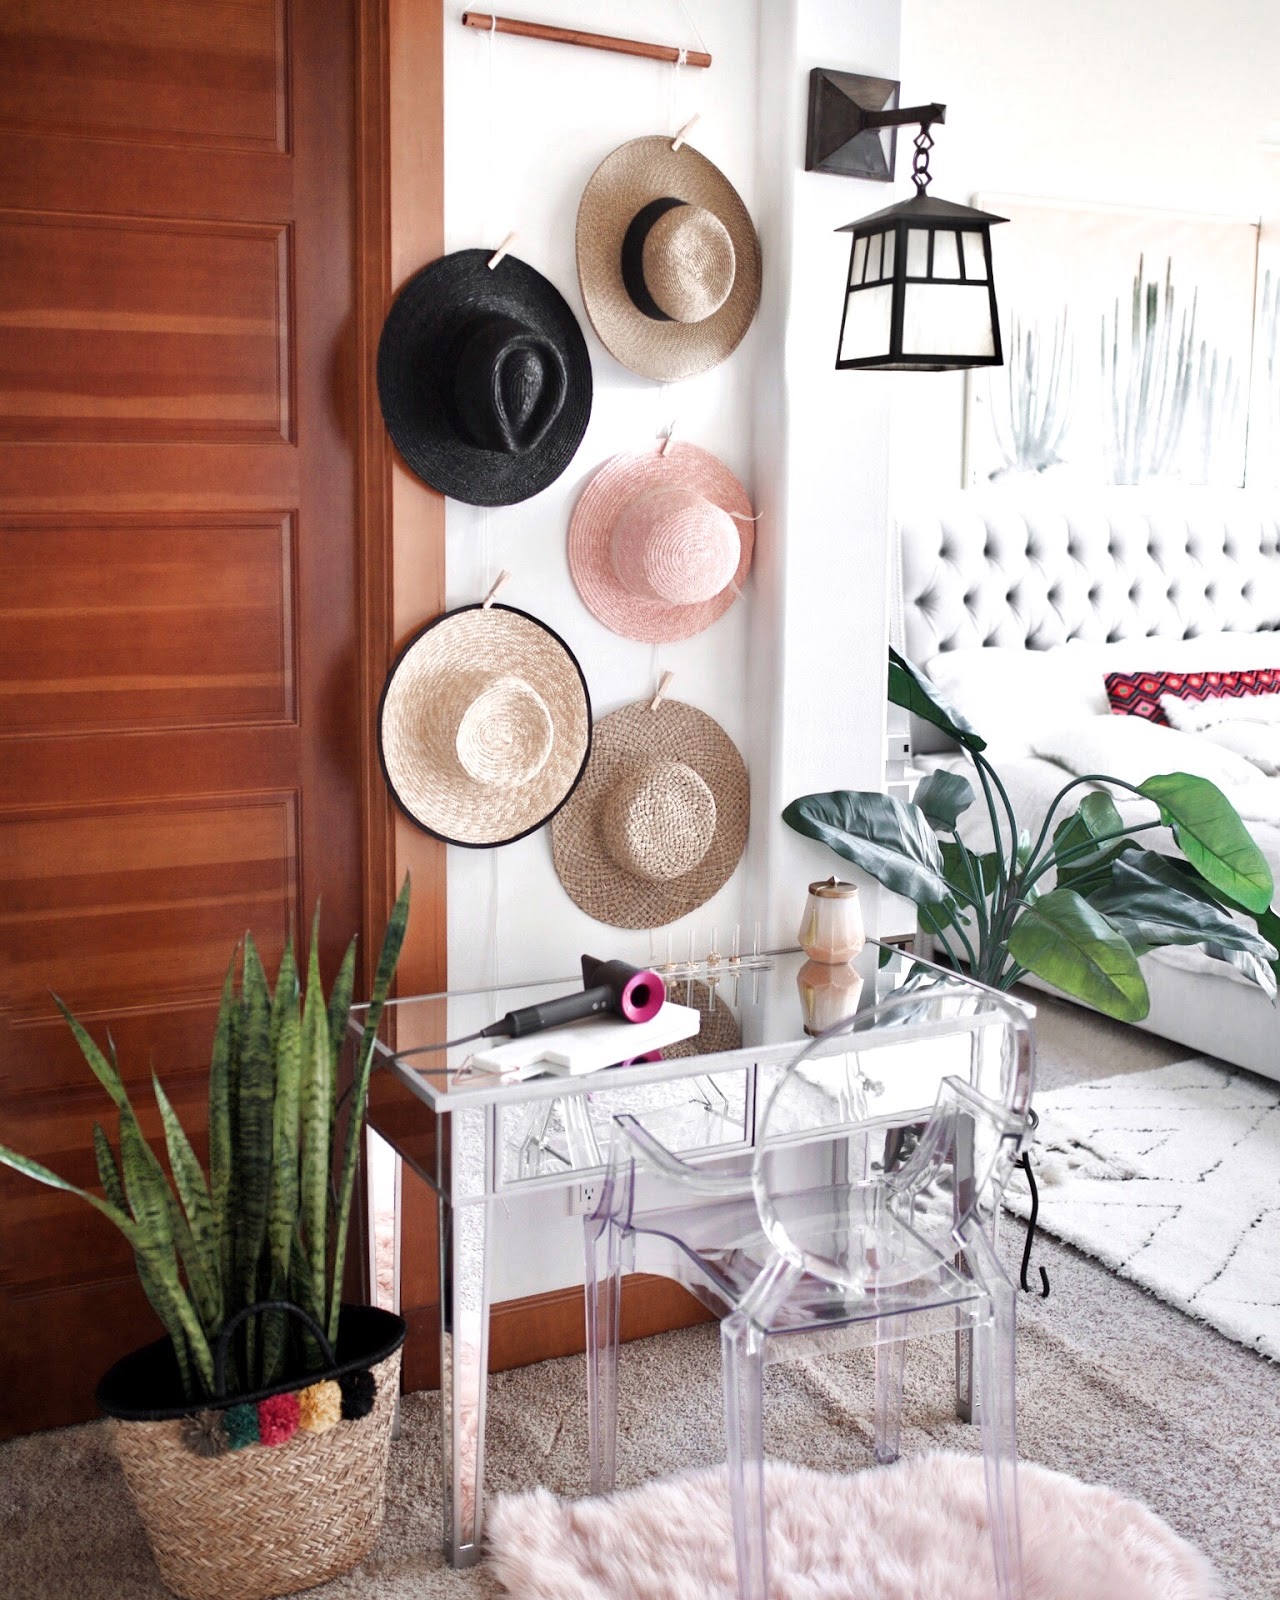 DIY hat wall display